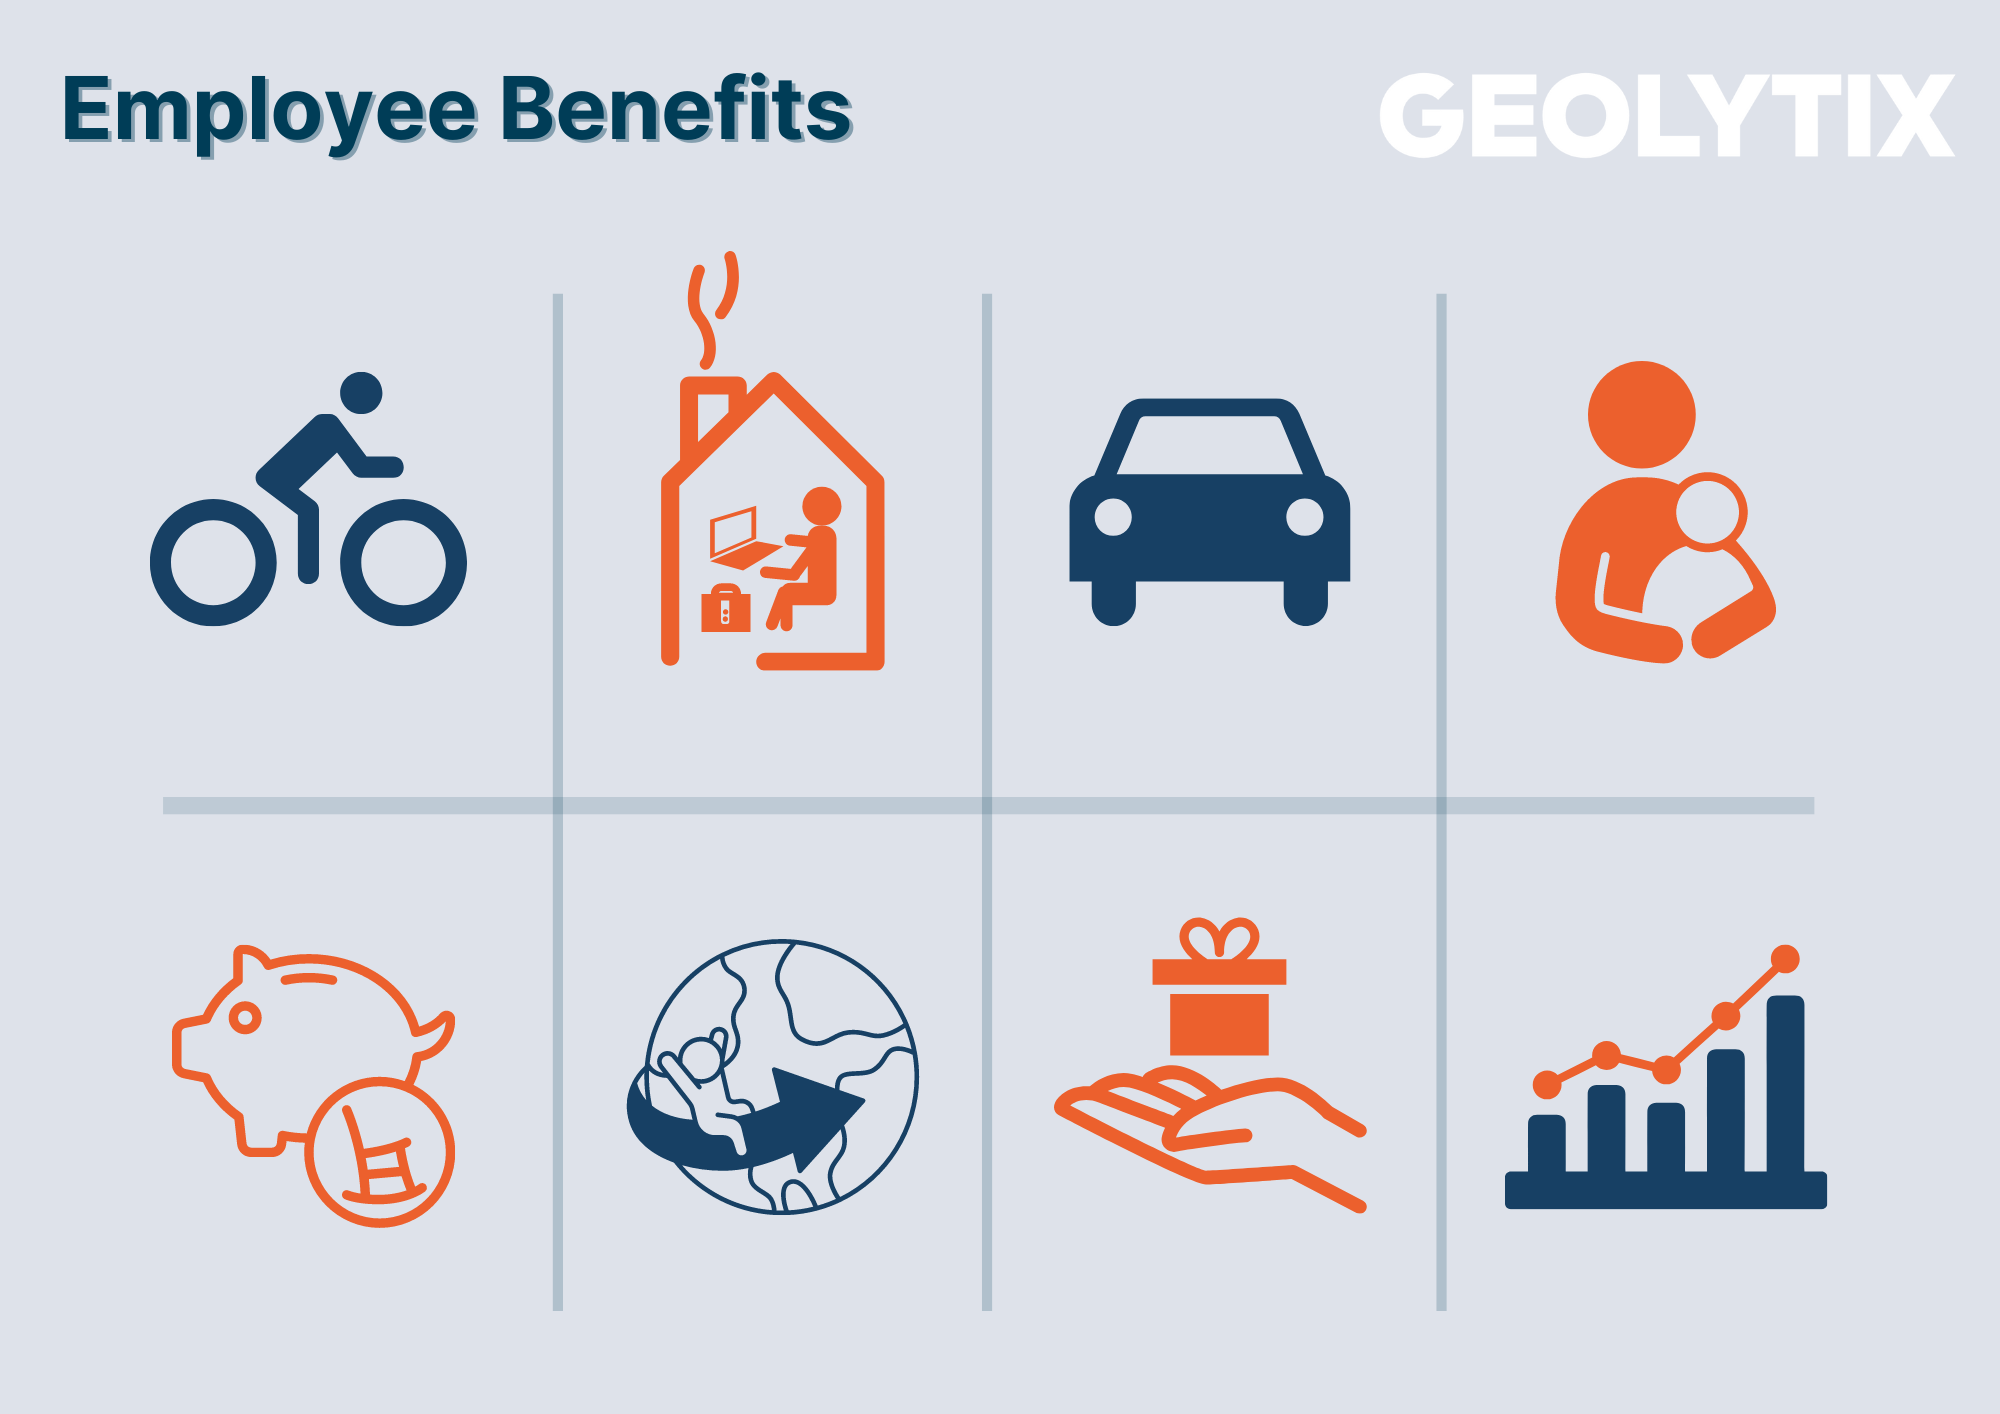 Employee Benefits at Geolytix